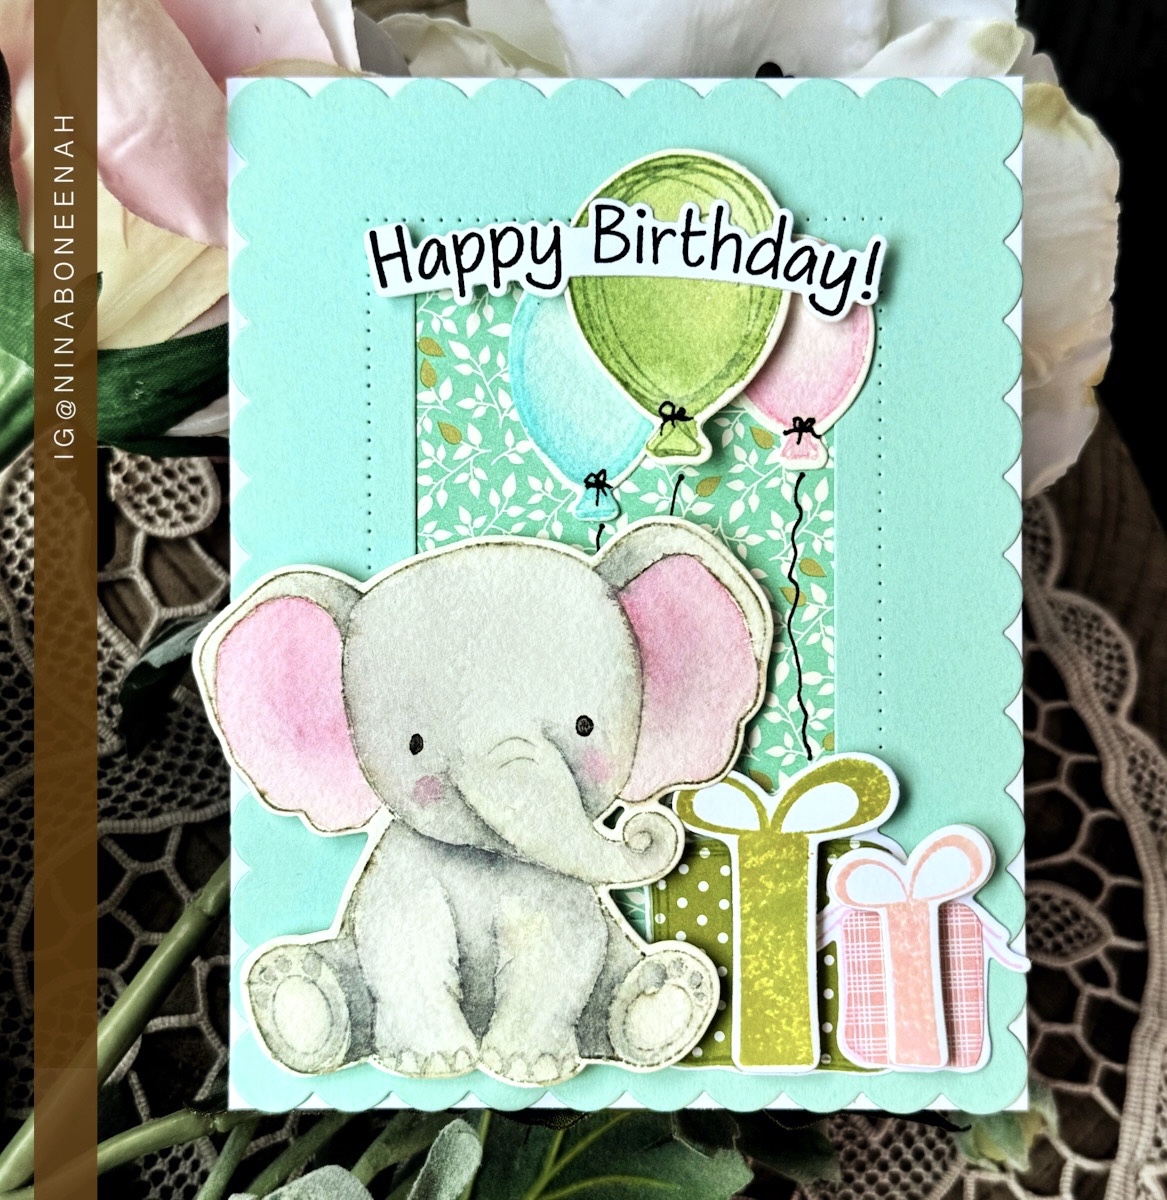 Baby Elephant Stamp Set